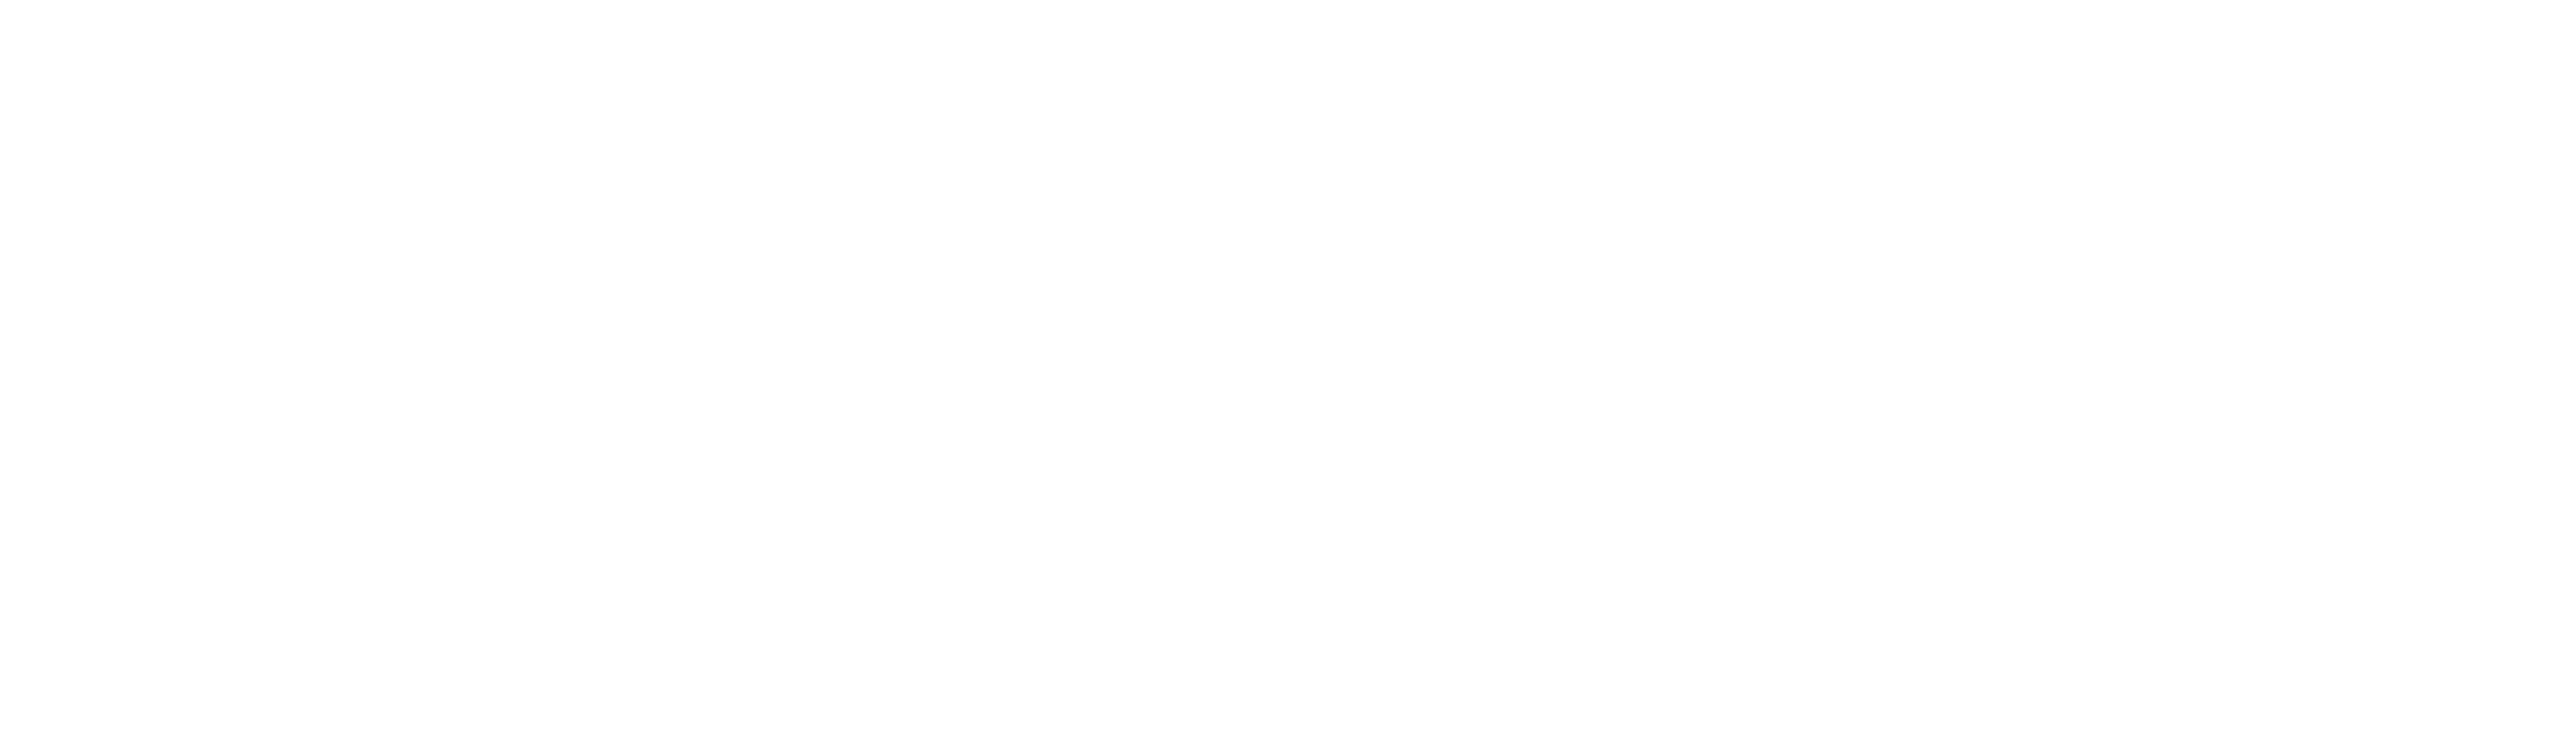 Western Missouri Medical Center